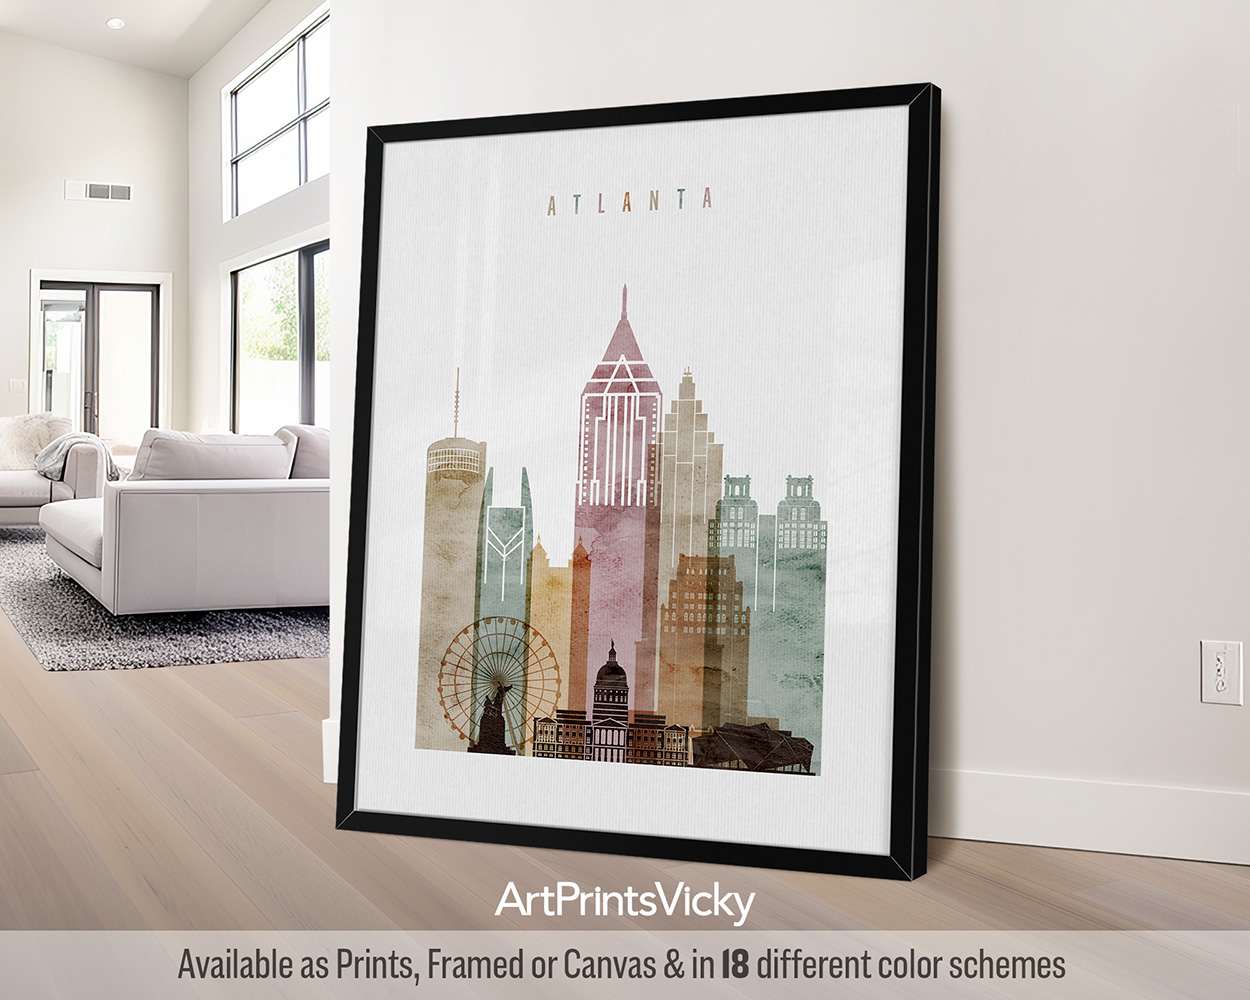 Atlanta Dreamscape: Watercolor Skyline Wall Art Print by ArtPrintsVicky